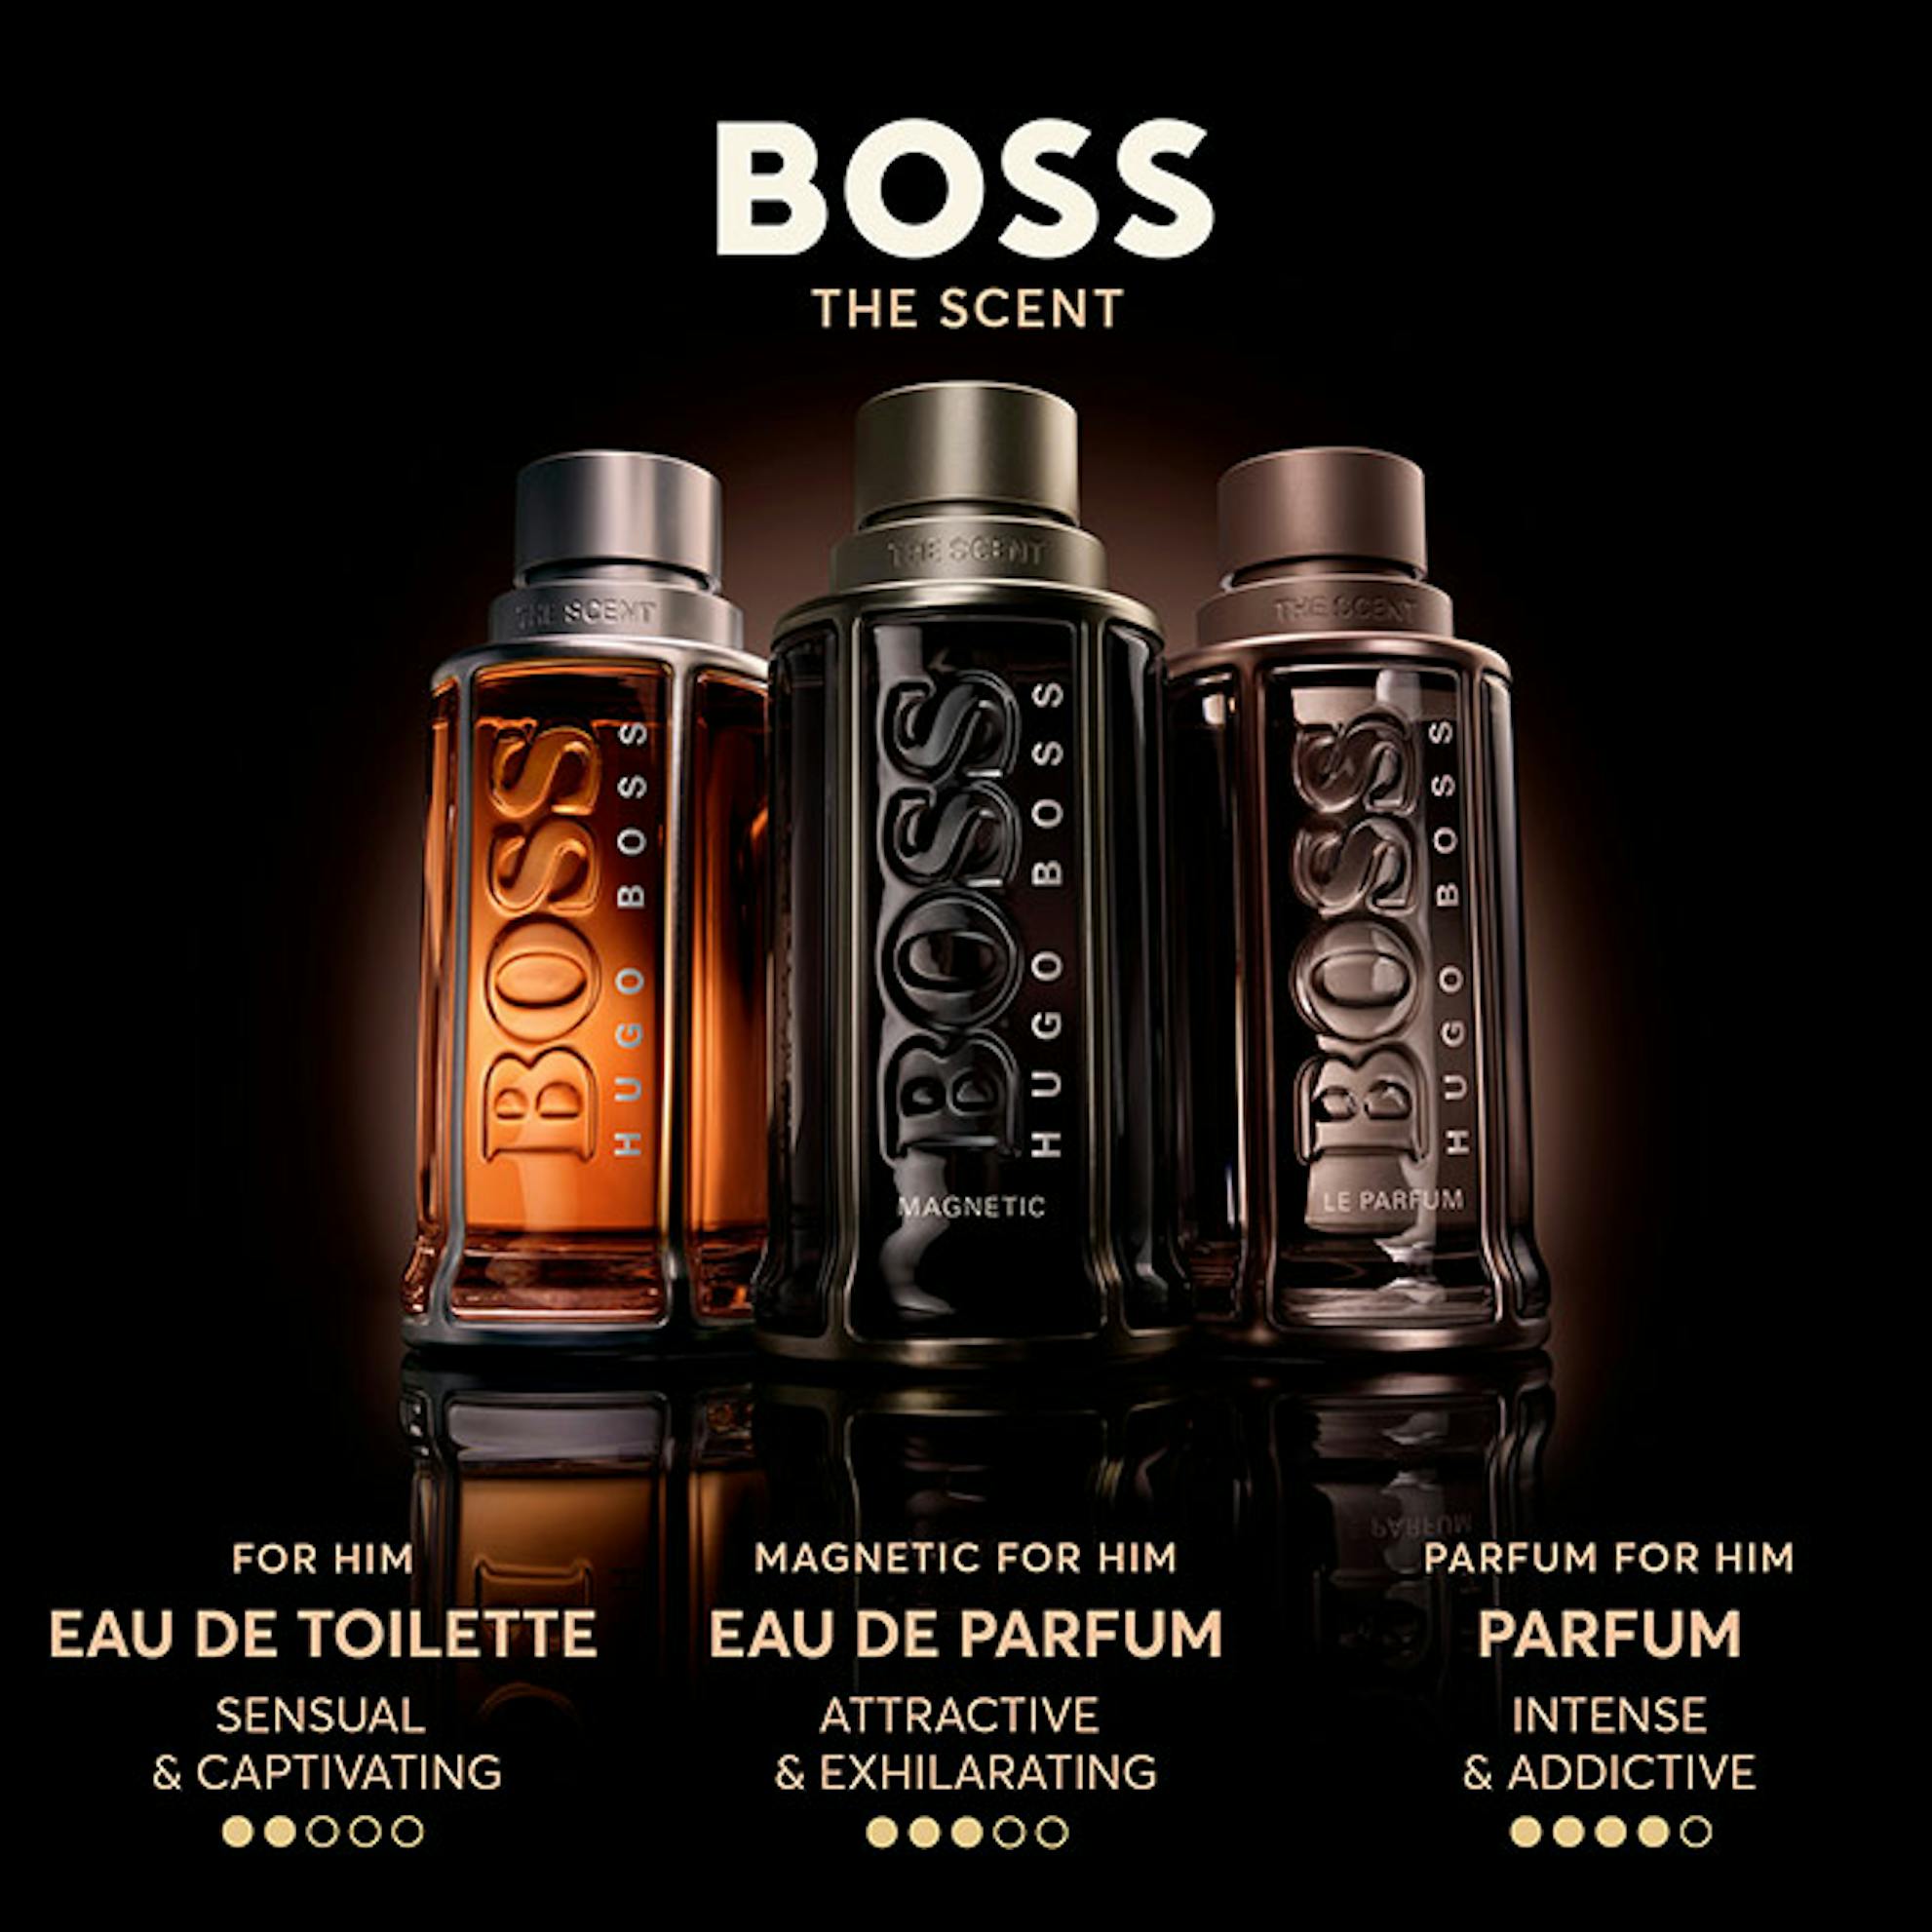 Le scent hugo boss. Hugo Boss the Scent intense. Boss the Scent magnetik Parfum. Hugo Boss the Scent le Parfum. Hugo Boss Boss the Scent le Parfum for him.